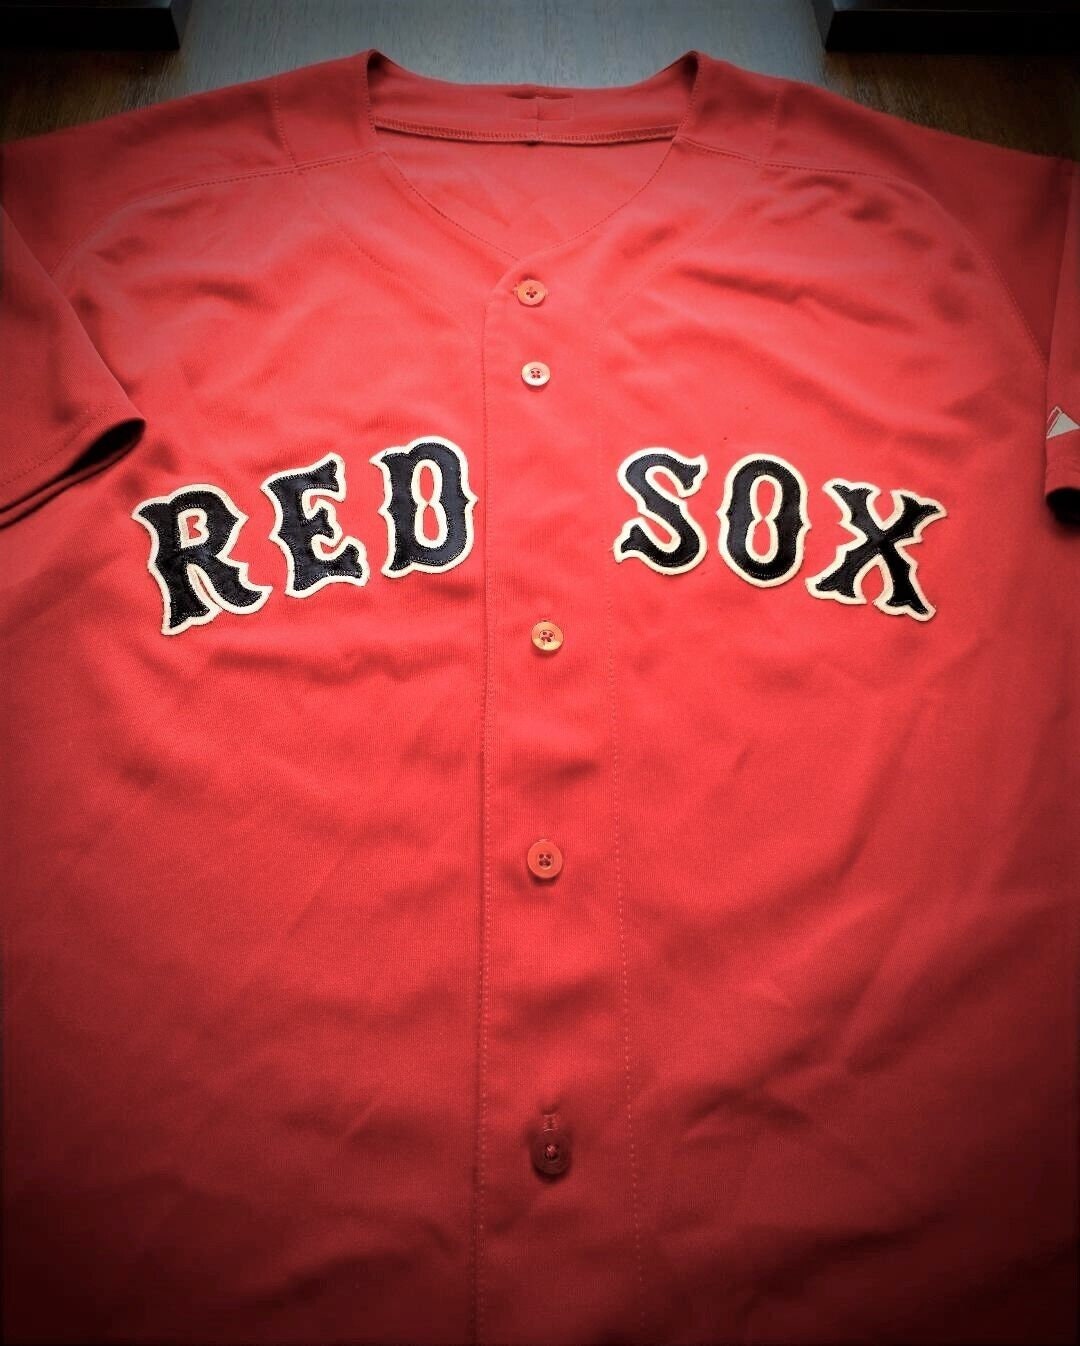 Majestic KEVIN YOUKILIS No. 20 BOSTON RED SOX (XL) T-Shirt Jersey